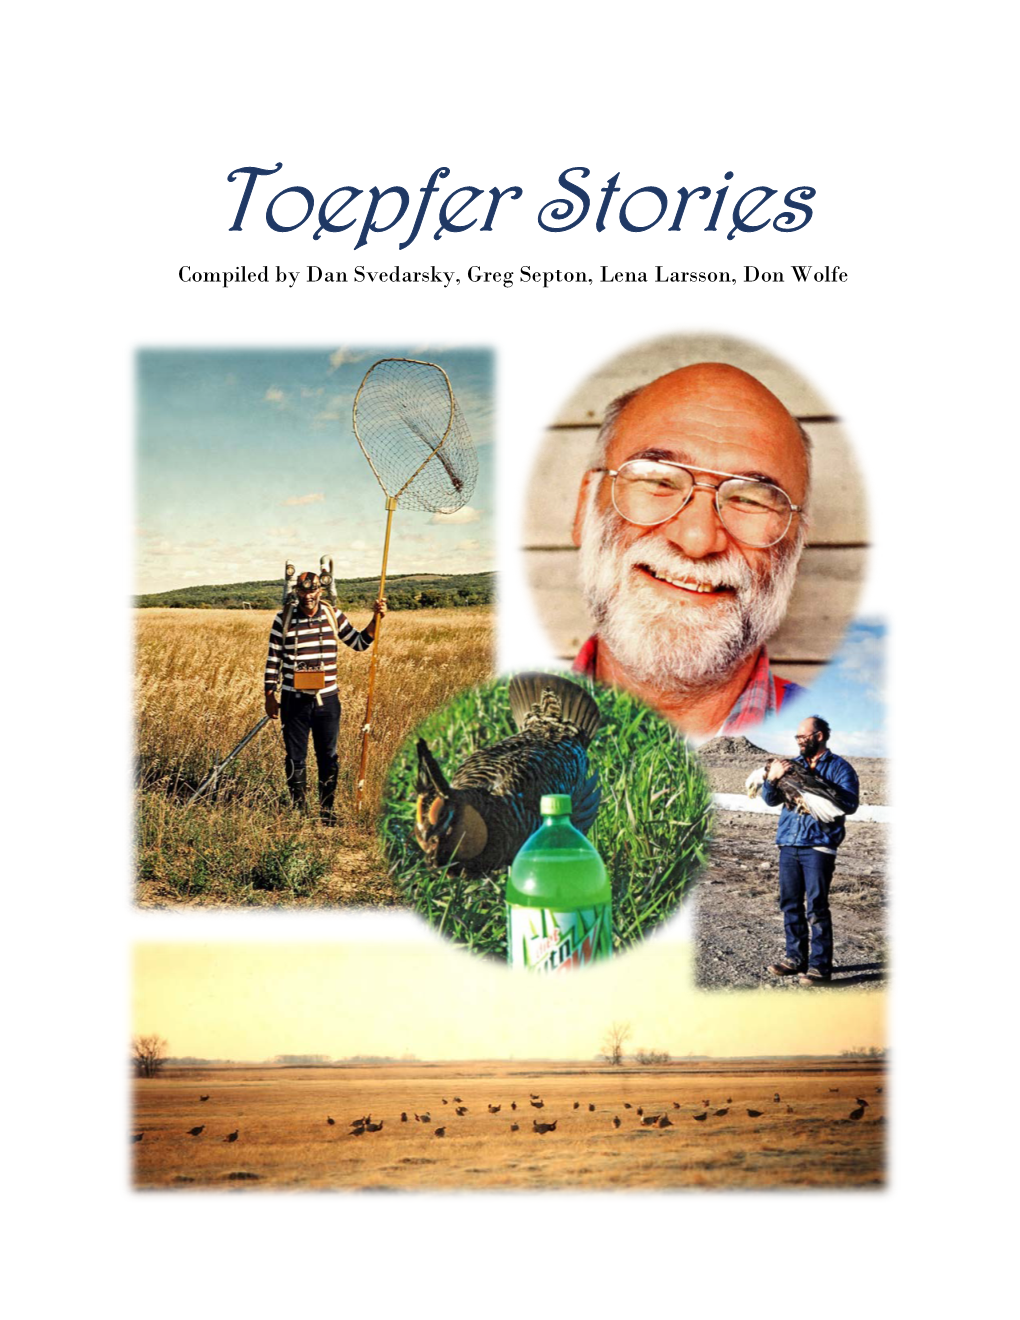 Toepfer Stories Compiled by Dan Svedarsky, Greg Septon, Lena Larsson, Don Wolfe